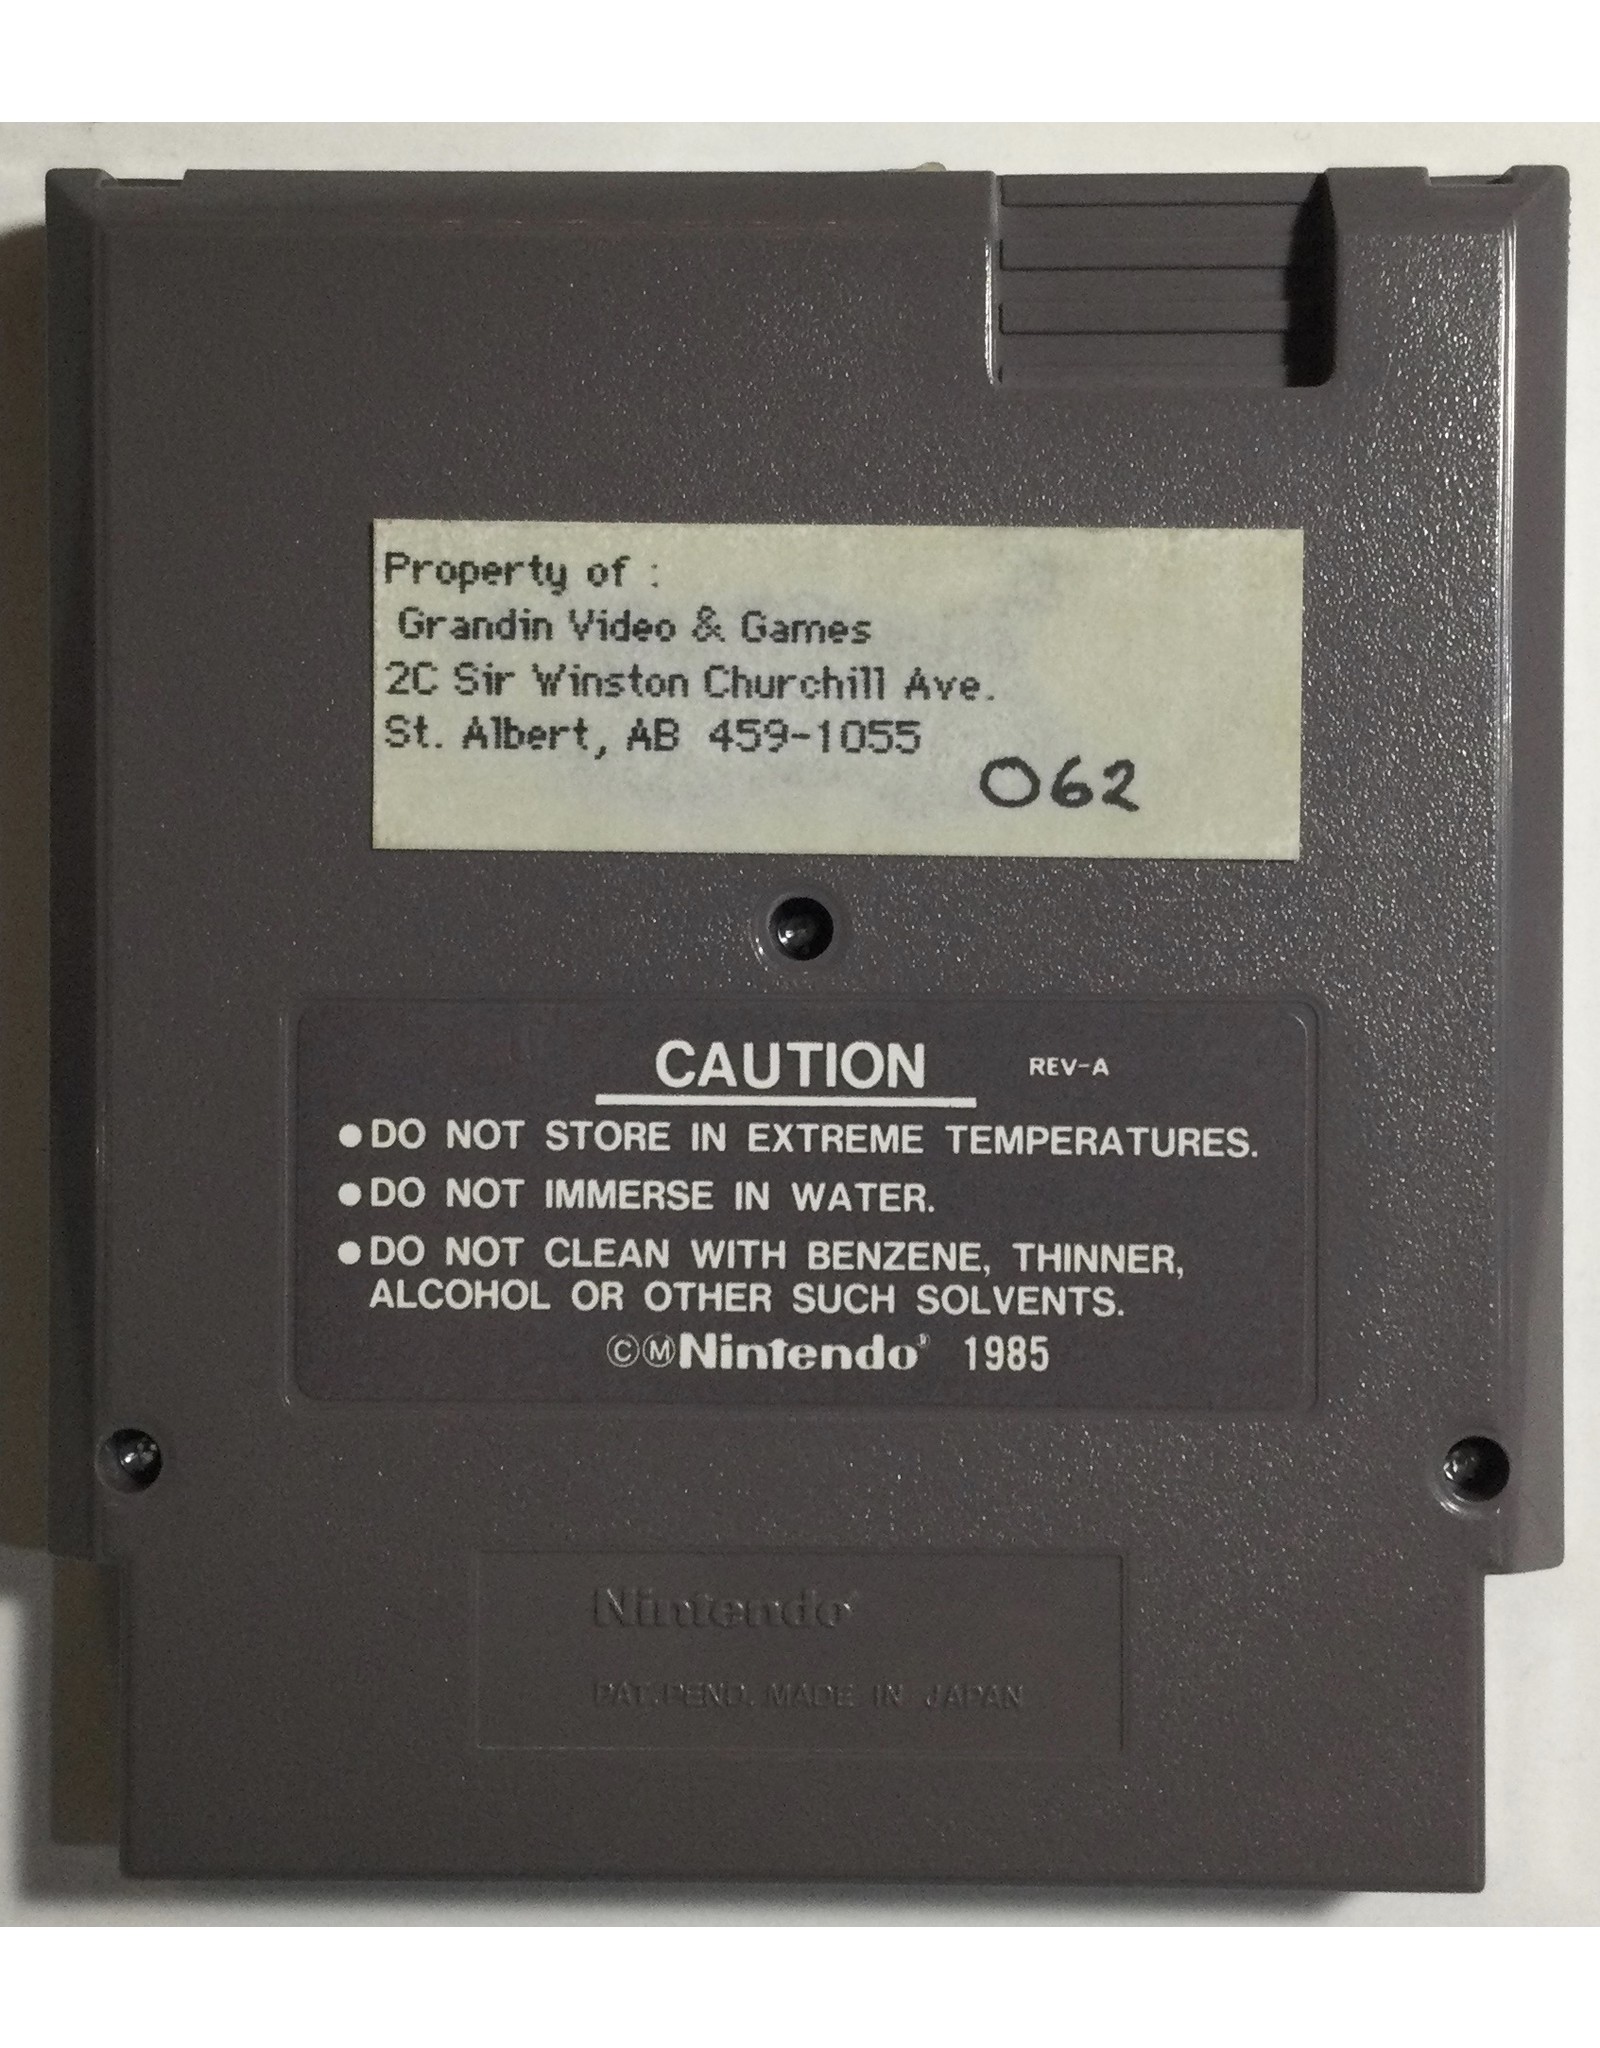 Super Spy Hunter for Nintendo Entertainment System (NES 